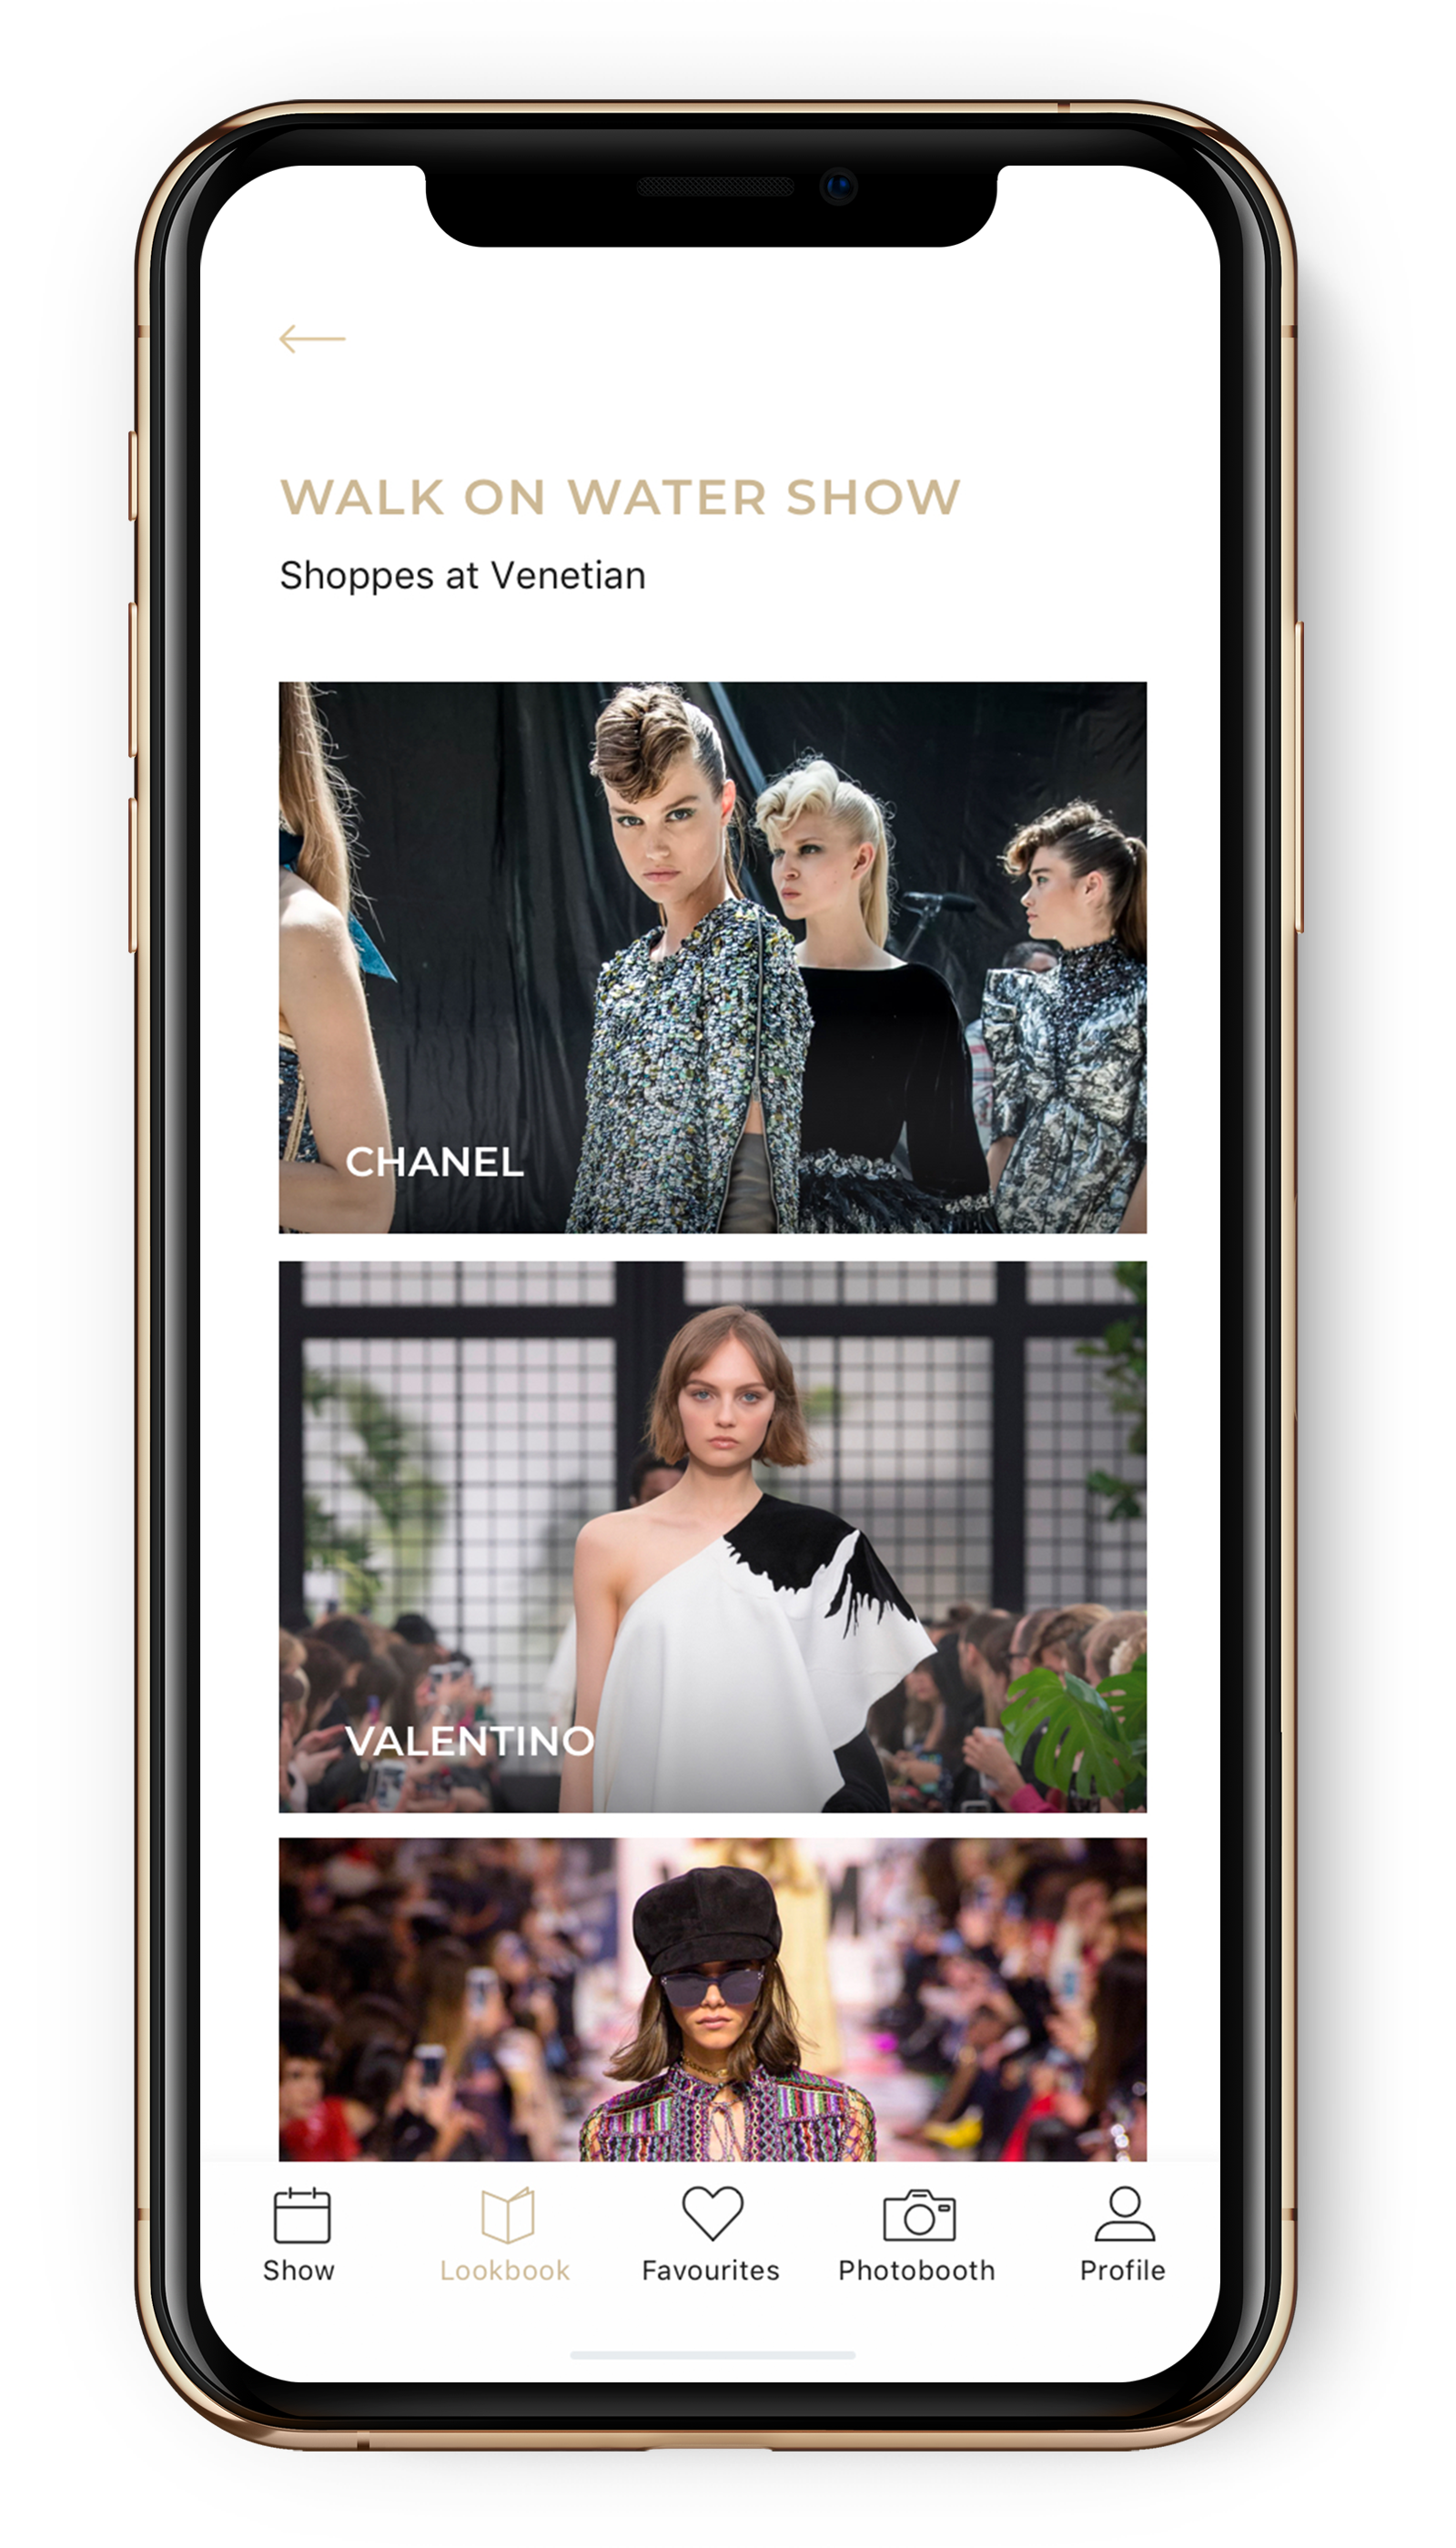 app development singapore smfw 02 - Sands Macao Fashion Week